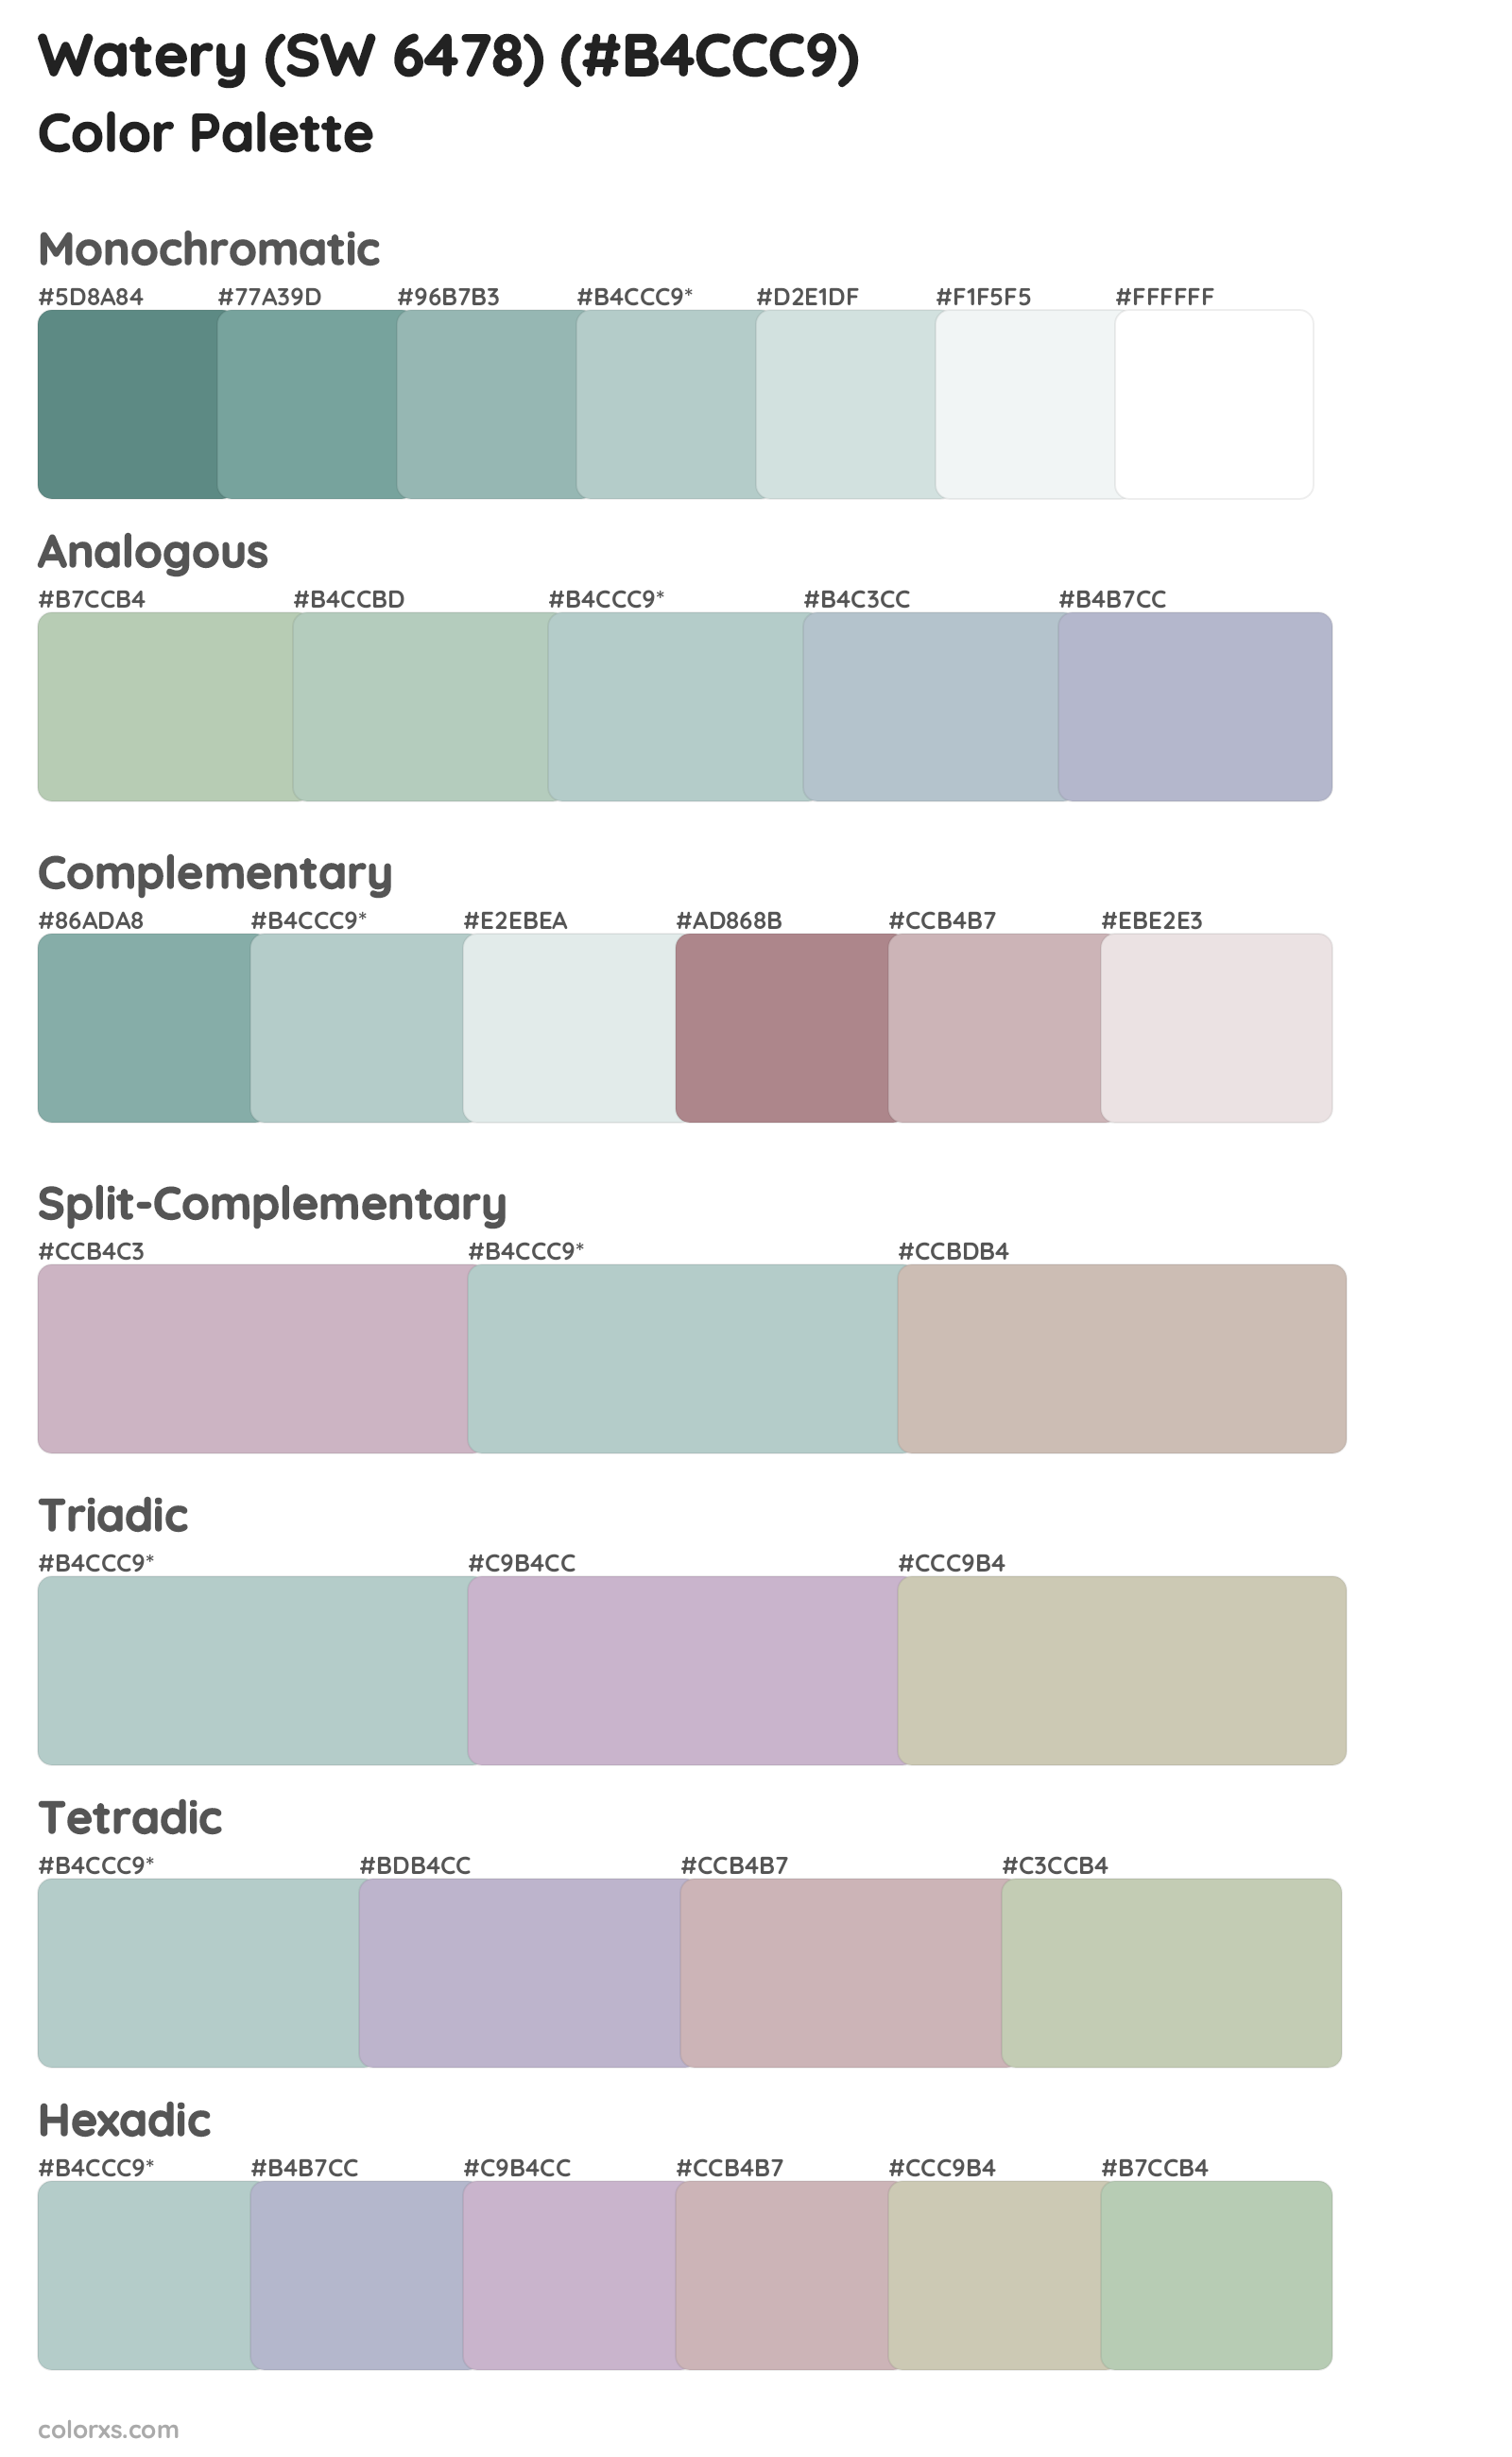 Watery (SW 6478) Color Scheme Palettes